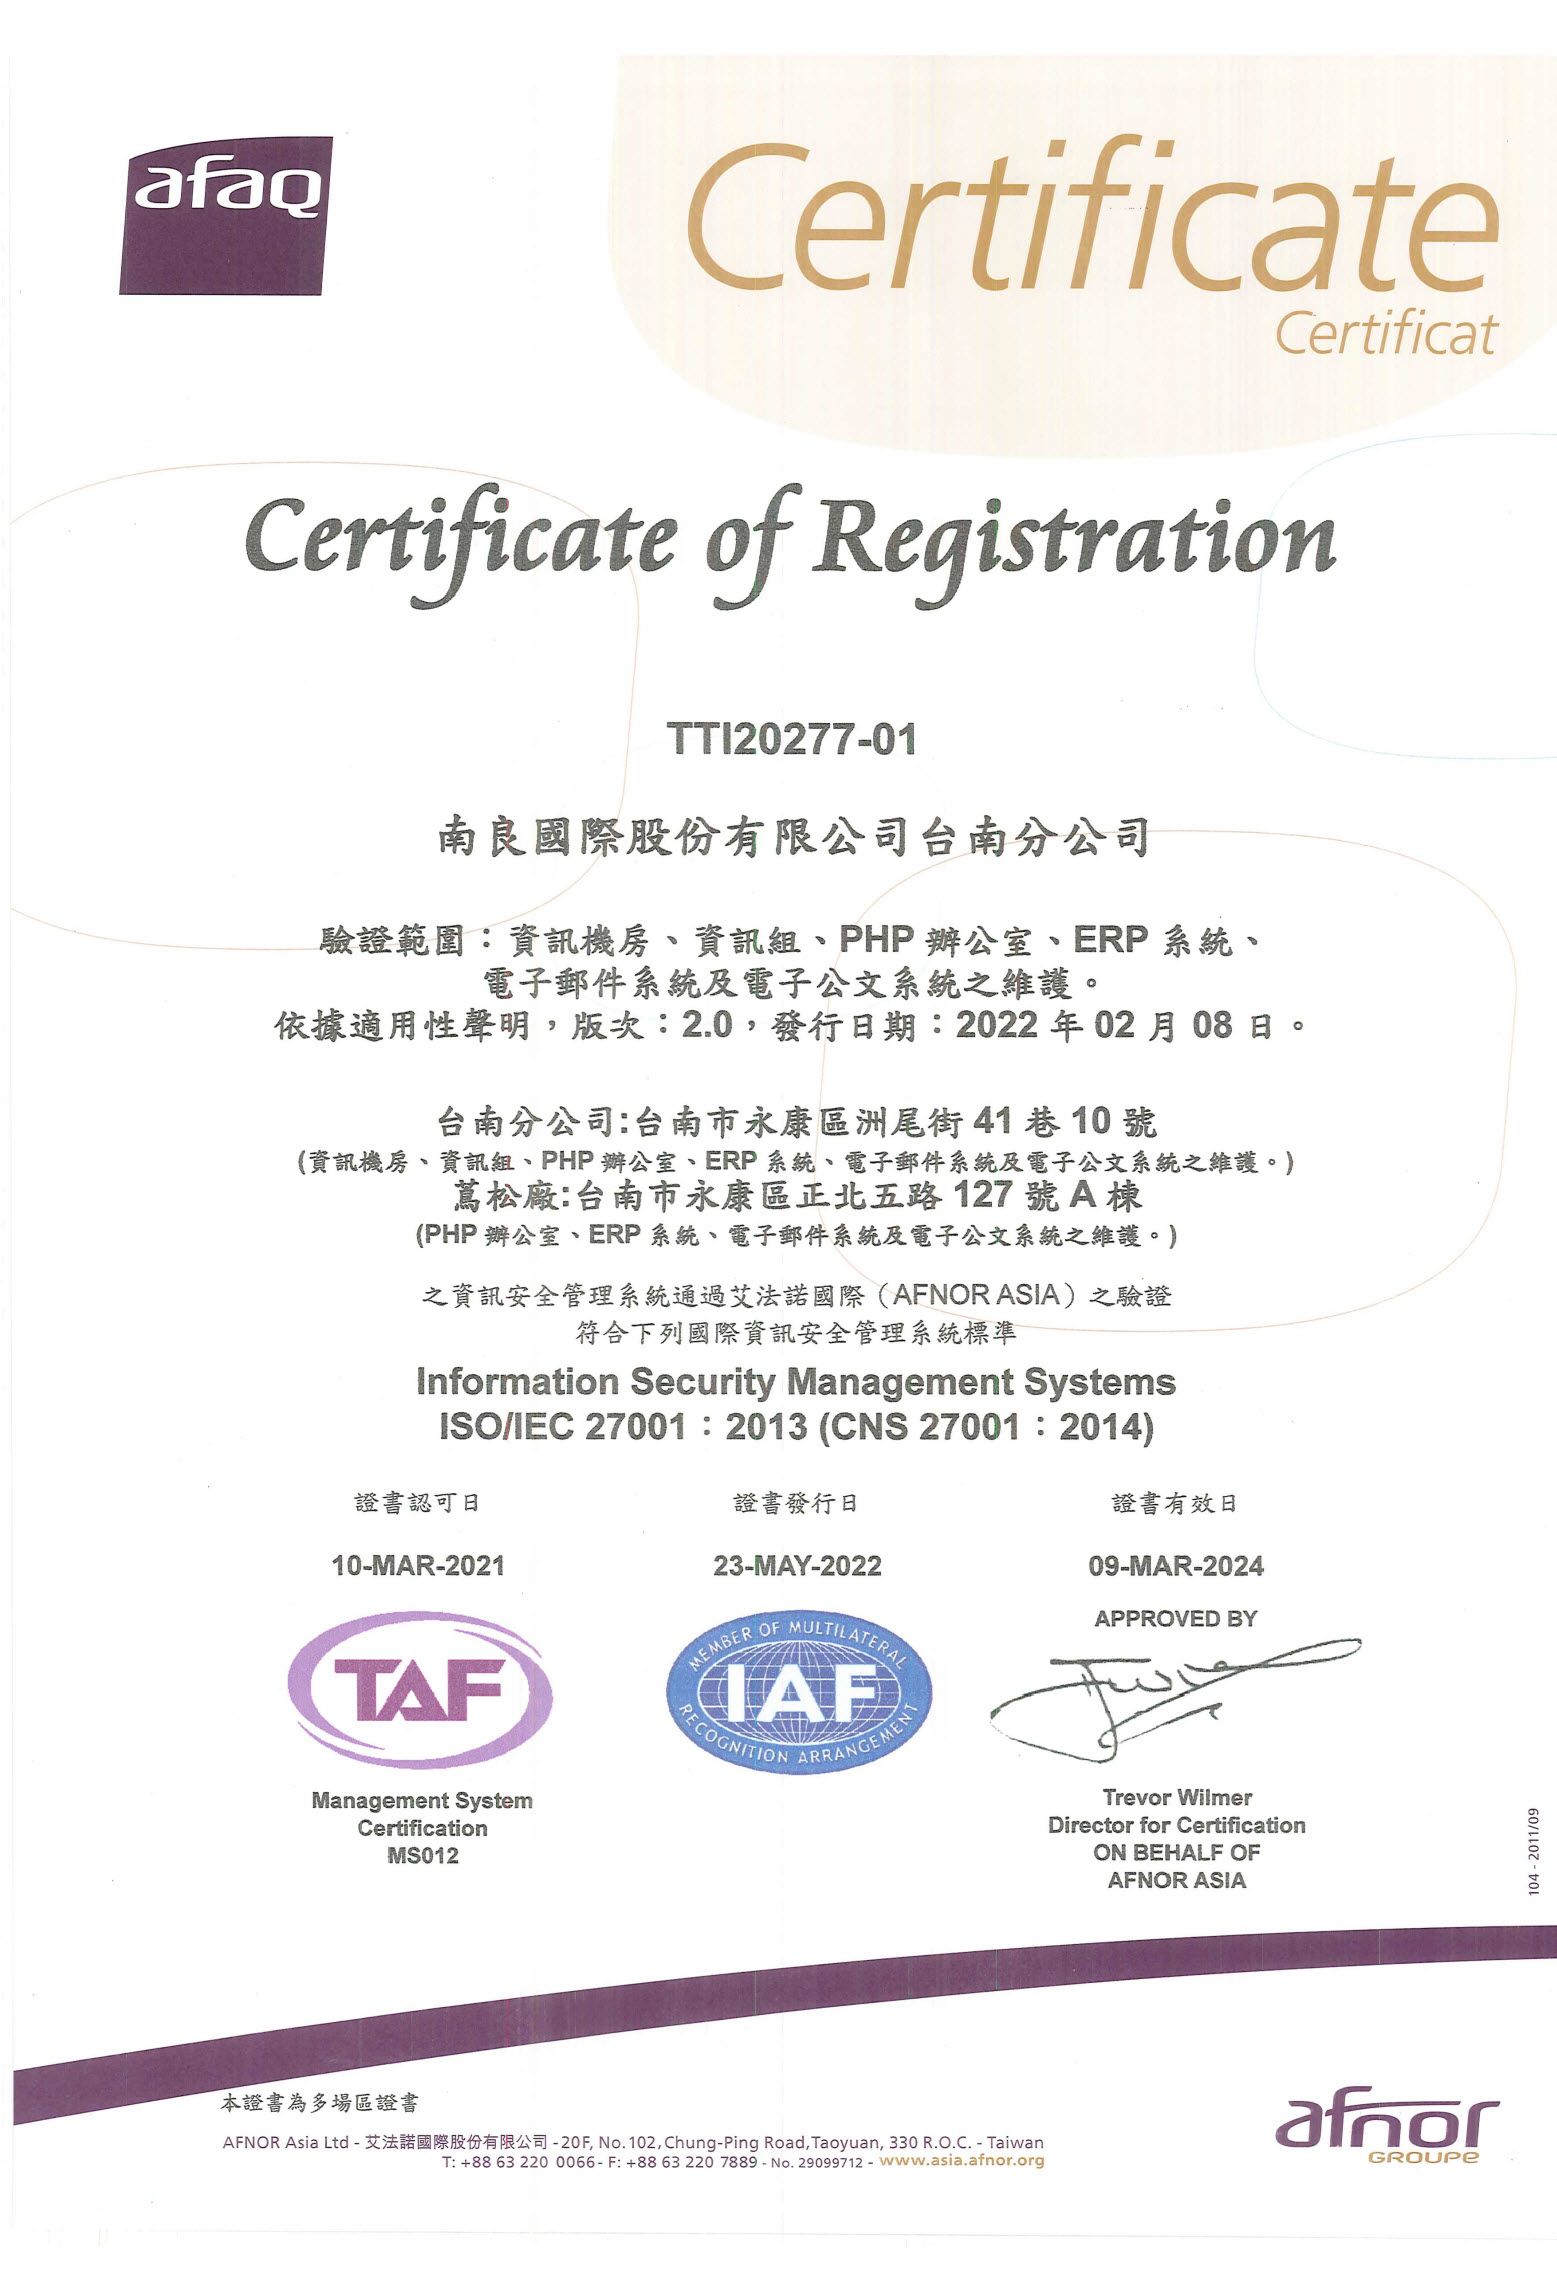 Certyfikat ISO 27001